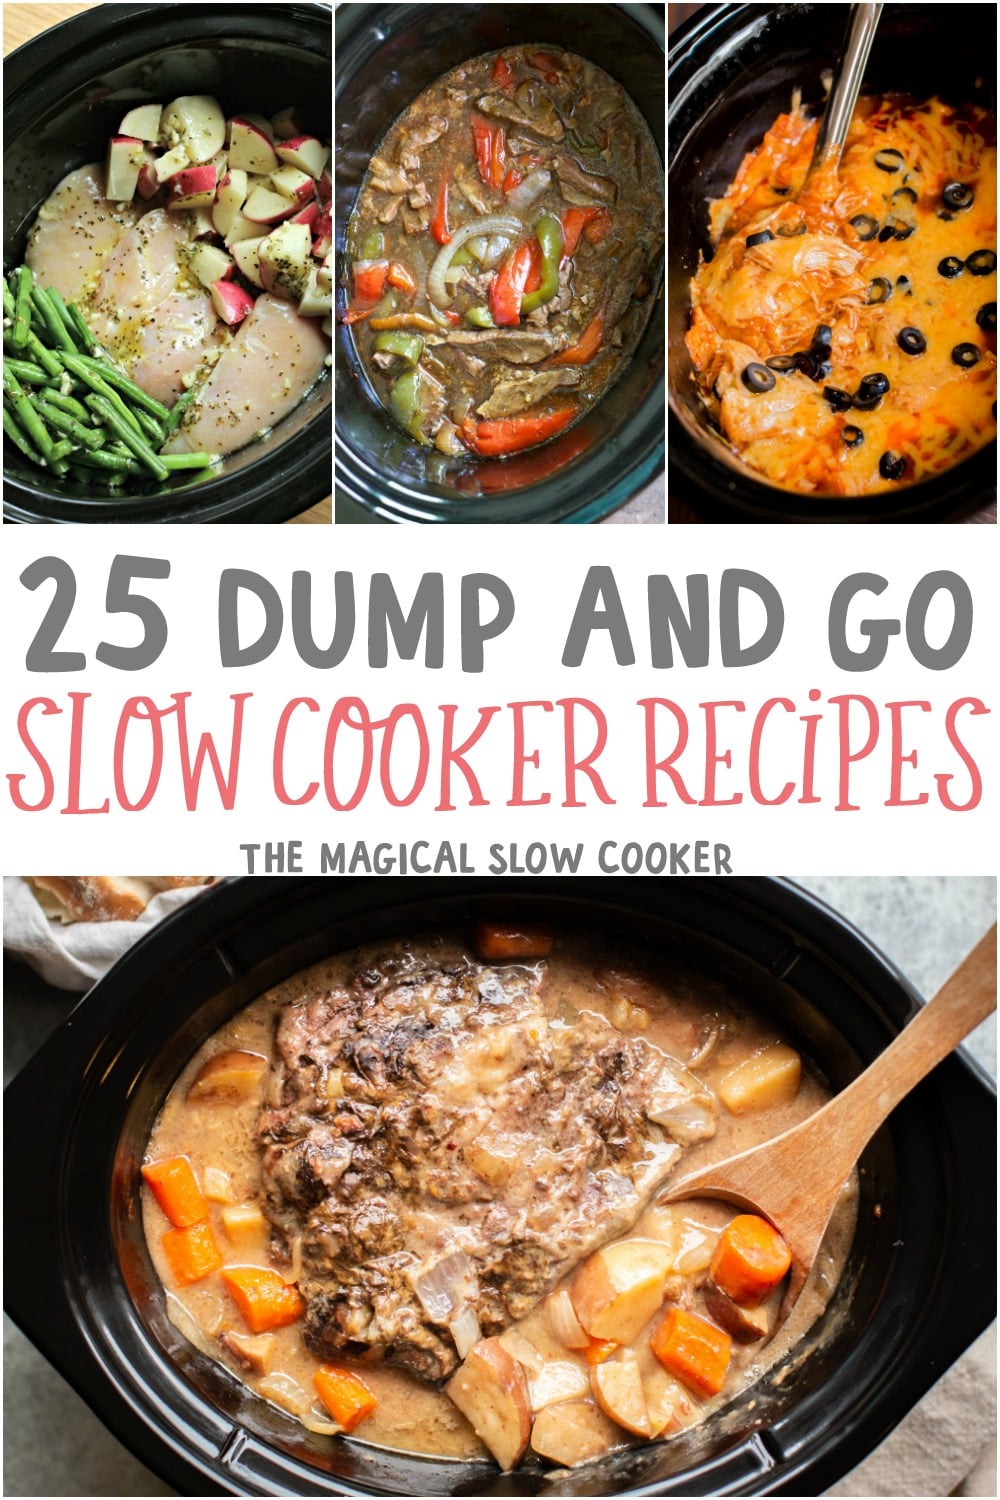 https://www.themagicalslowcooker.com/wp-content/uploads/2016/02/25-dump-and-go-slow-cooker-recipes-pinterest.jpg